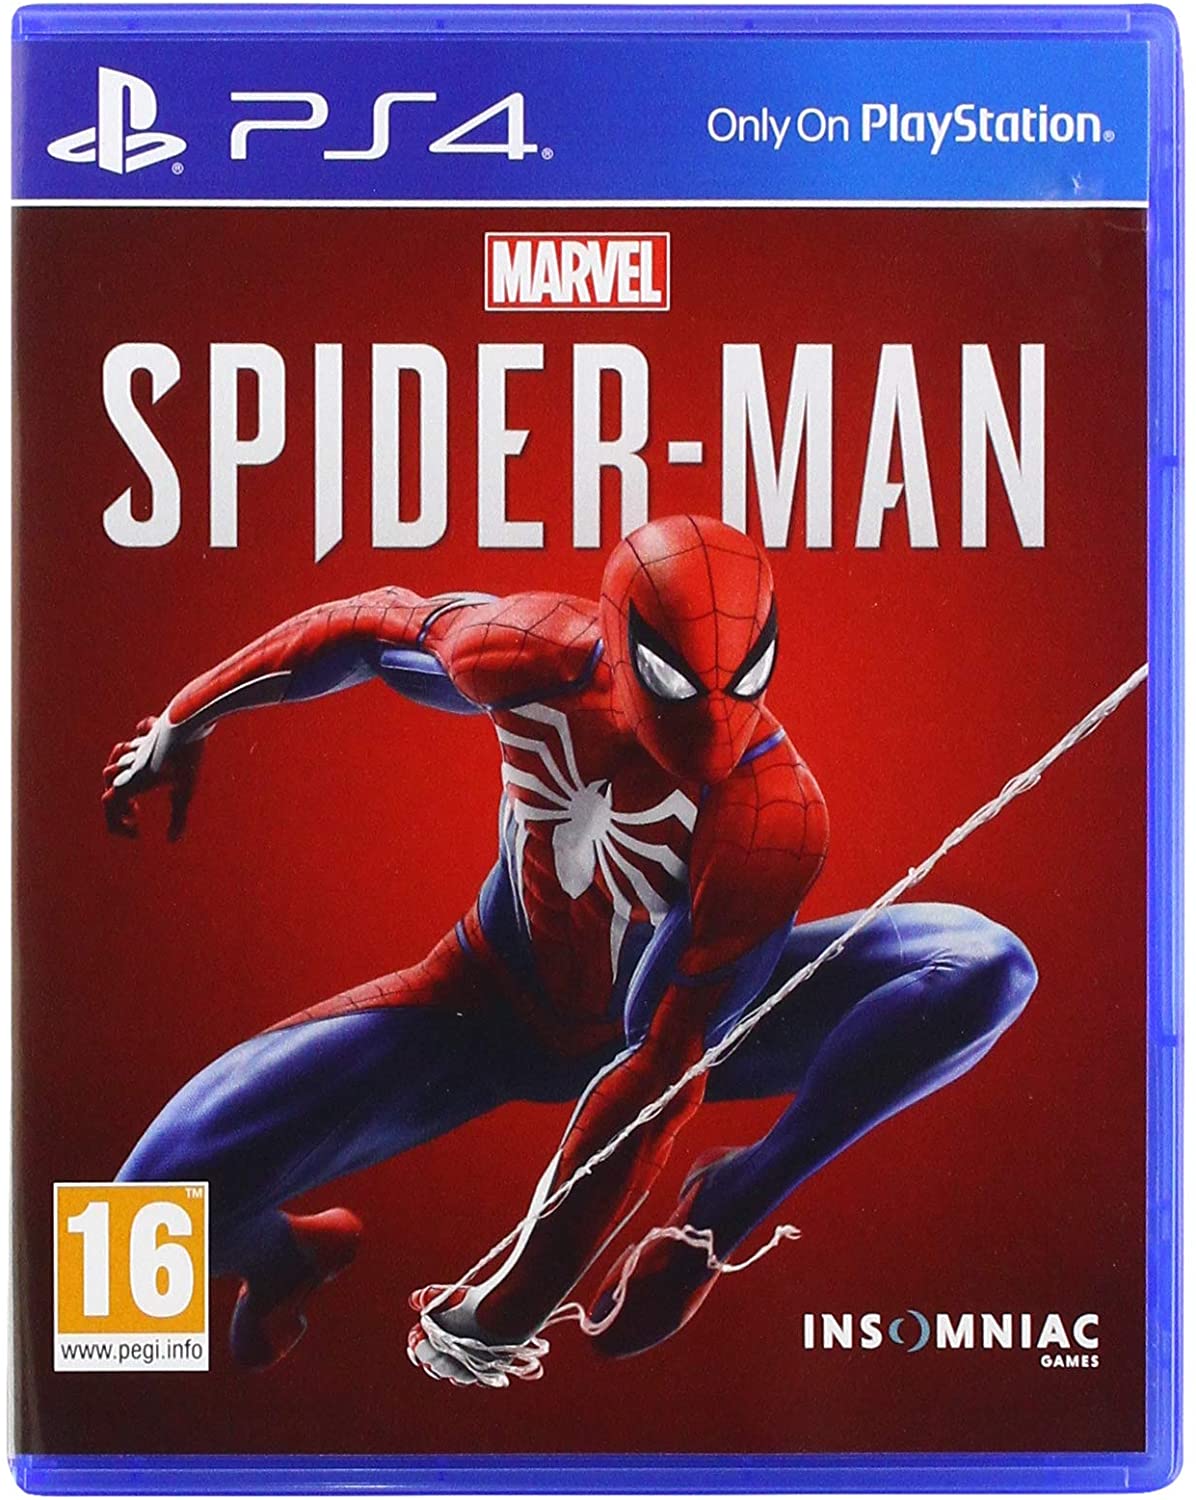 MARVEL SPIDER-MAN PS4 GAME - saynama